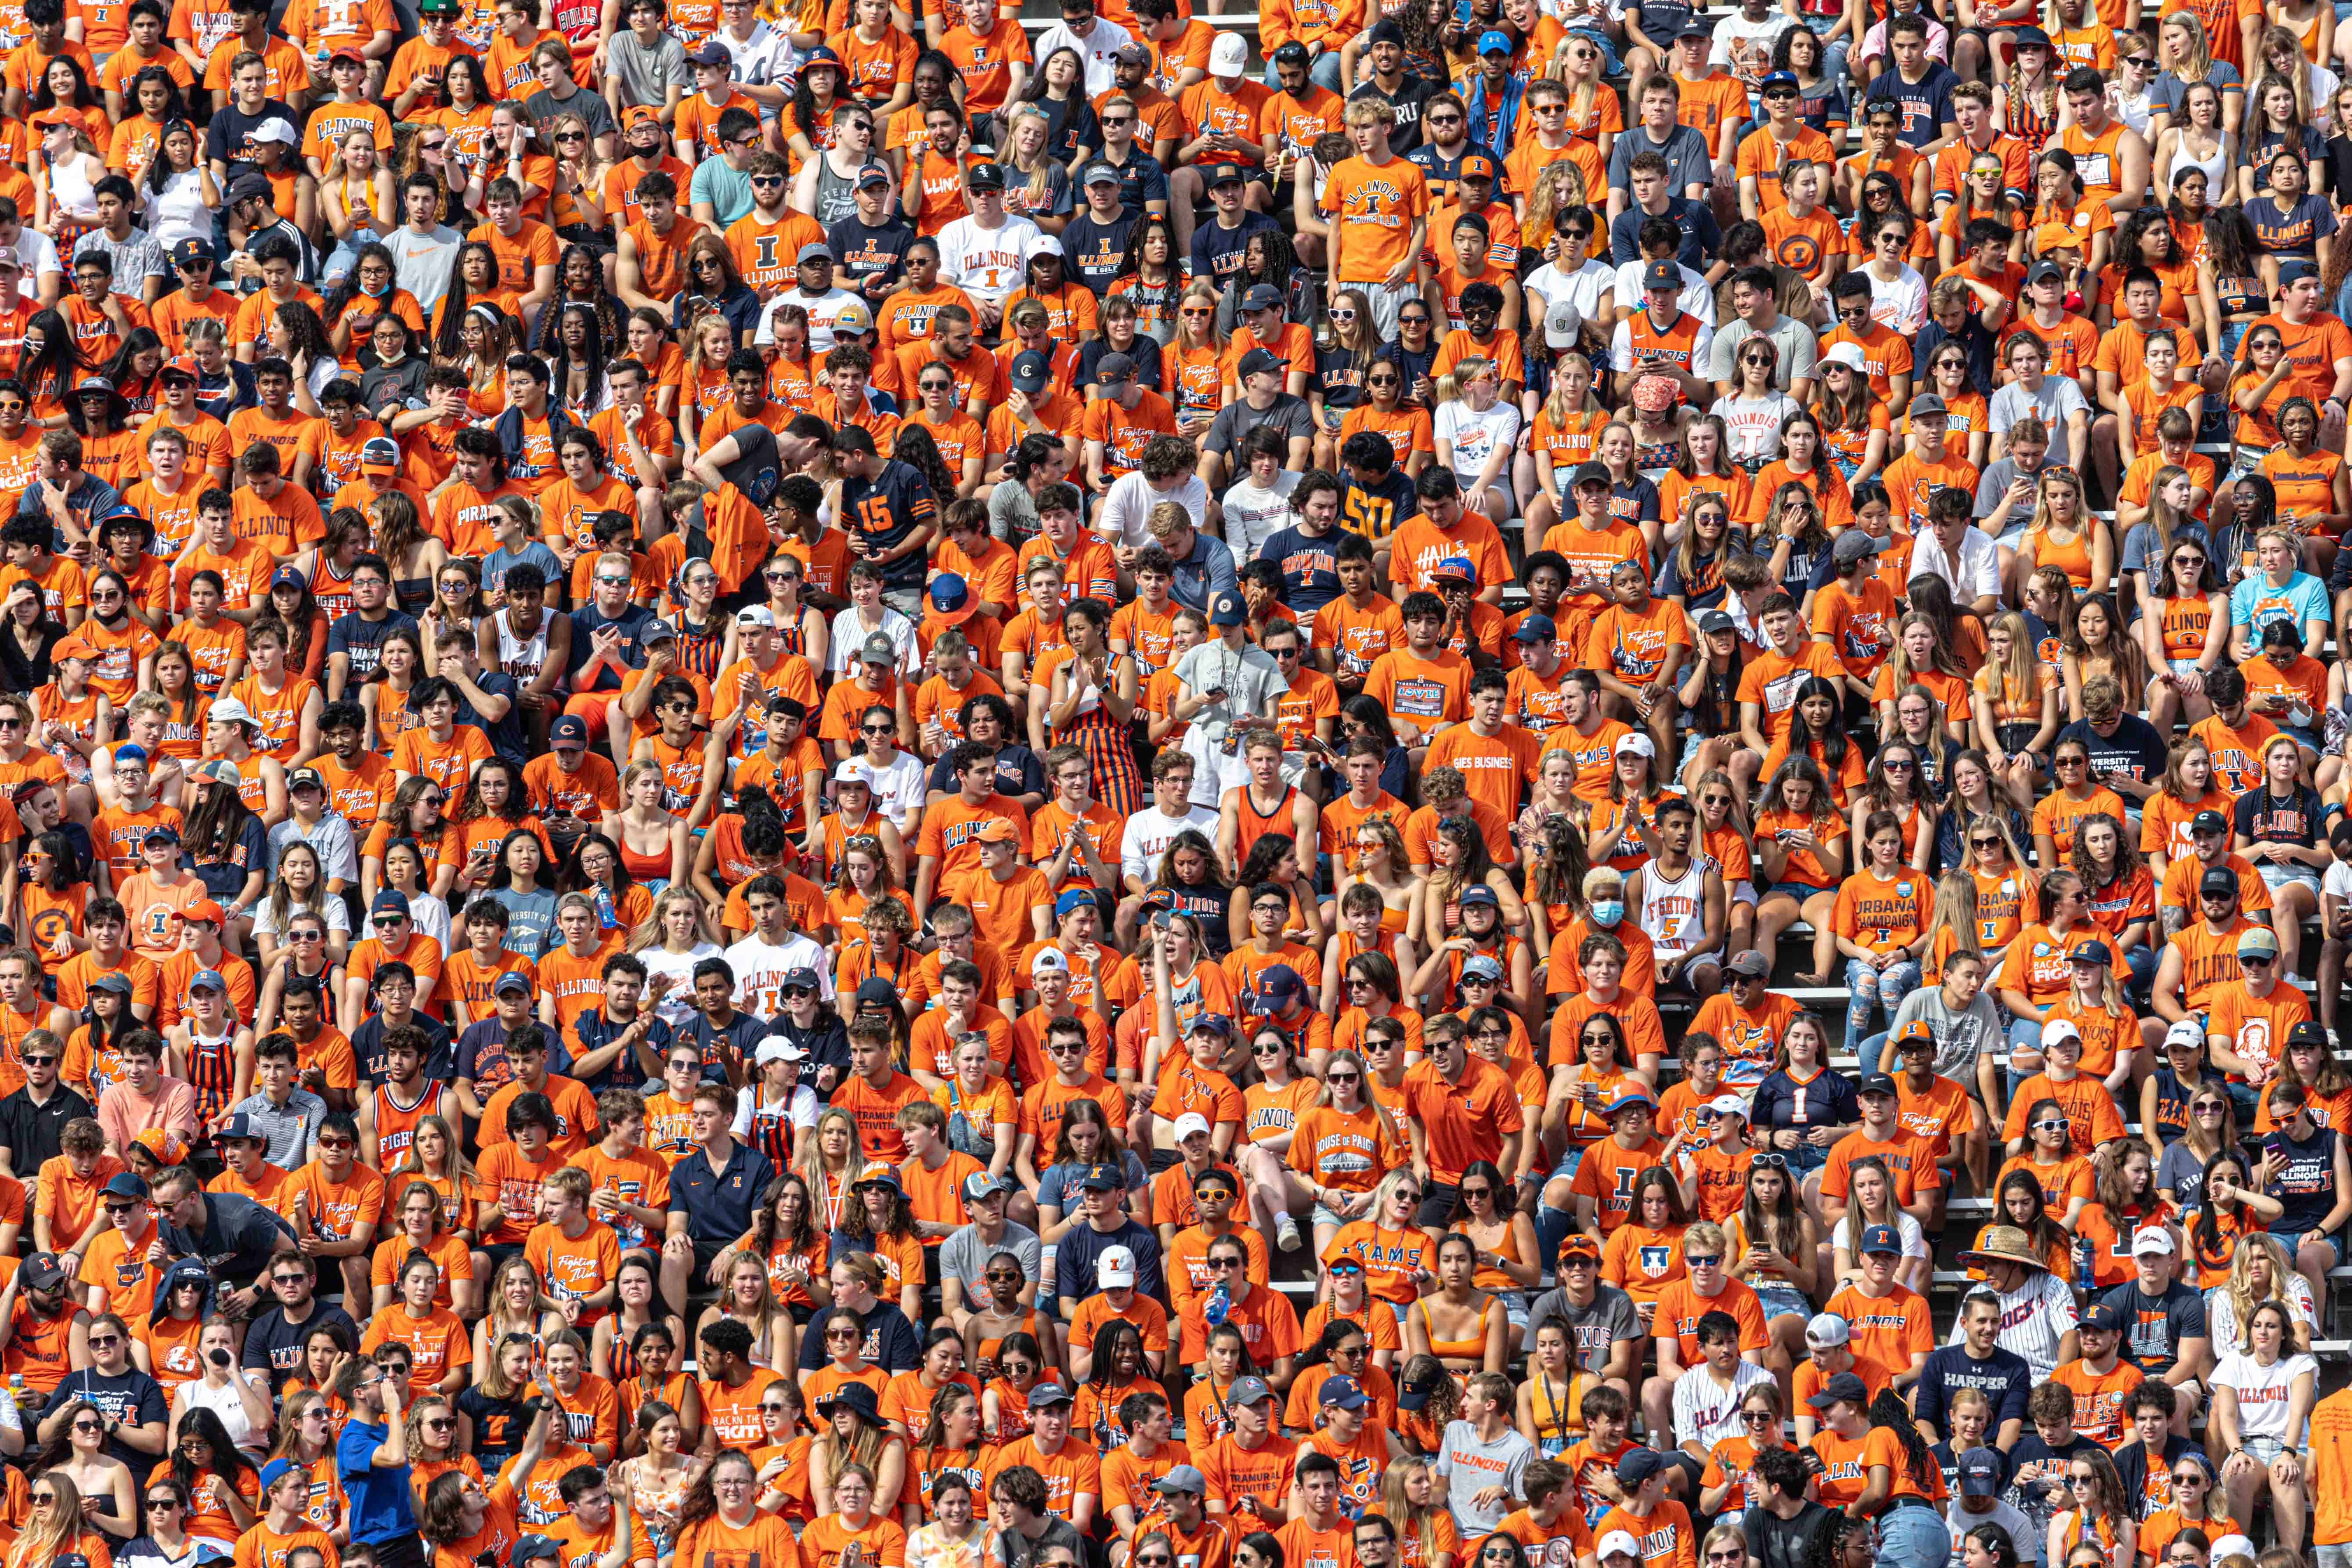 A stadium bleacher full of people wearing orange shirts.